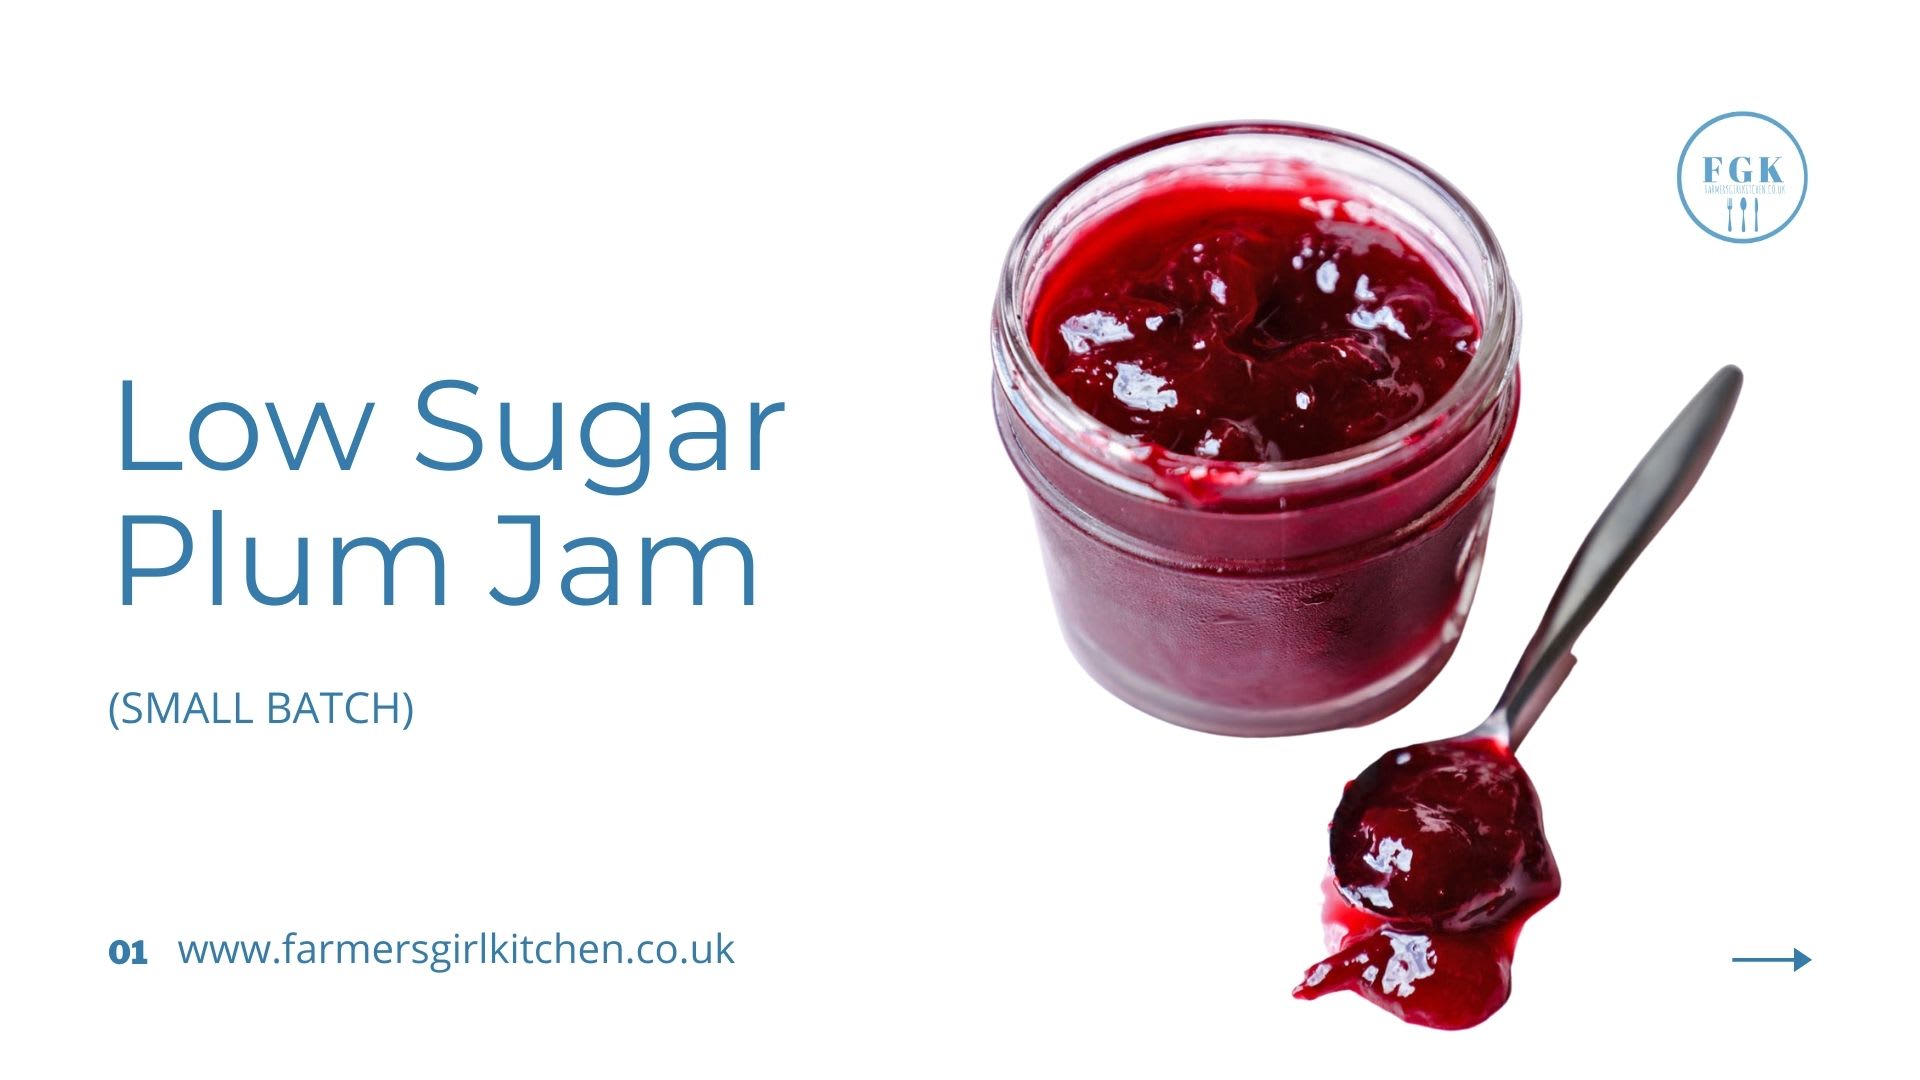 Low Sugar Plum Jam (Small Batch) - Farmersgirl Kitchen